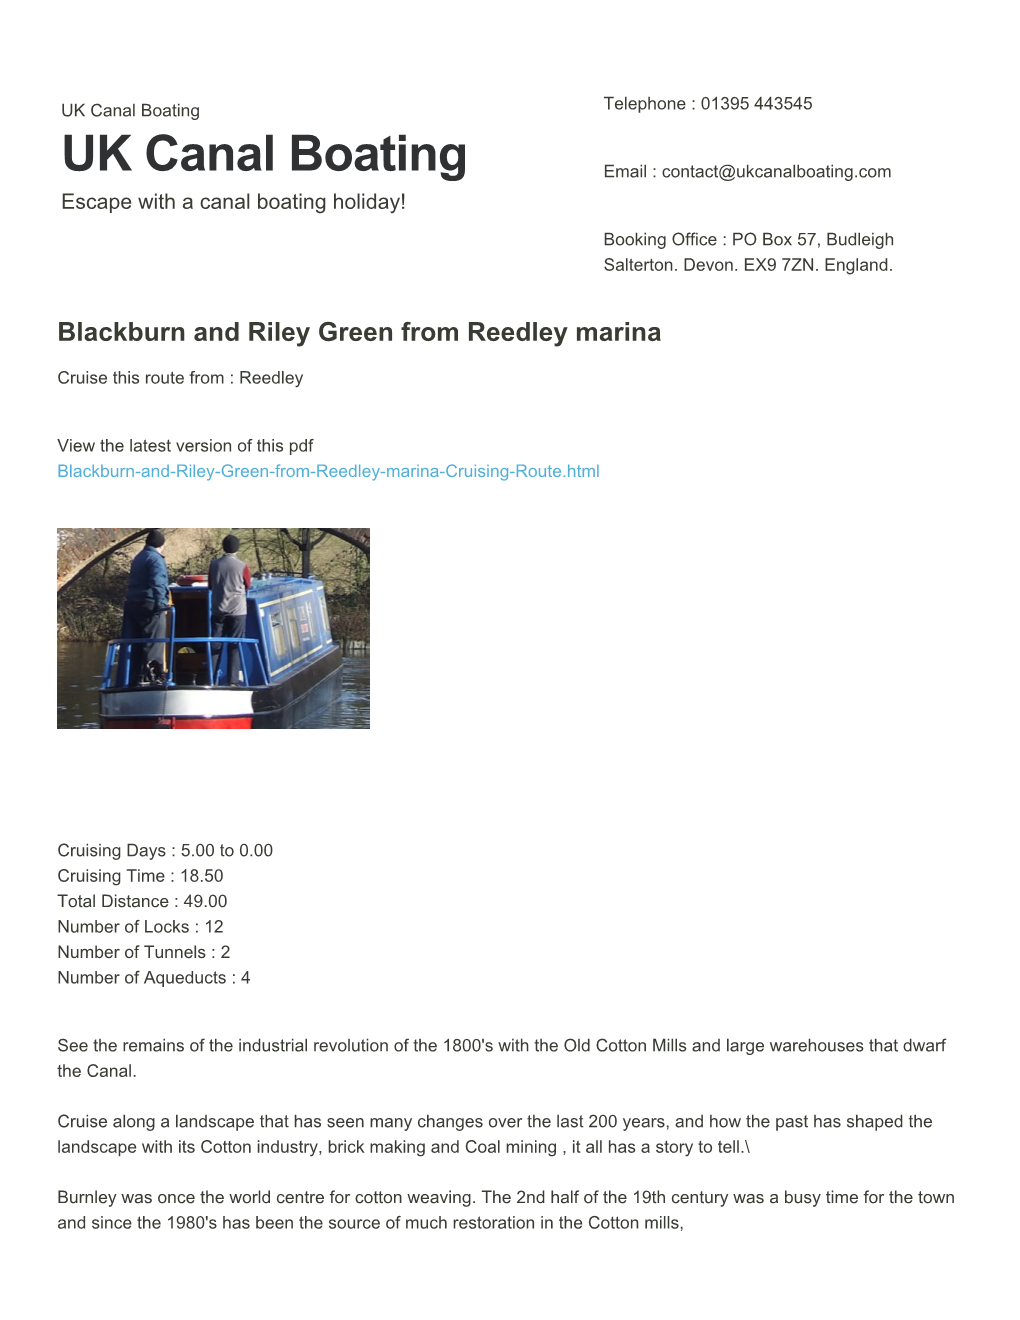 Blackburn and Riley Green from Reedley Marina | UK Canal Boating